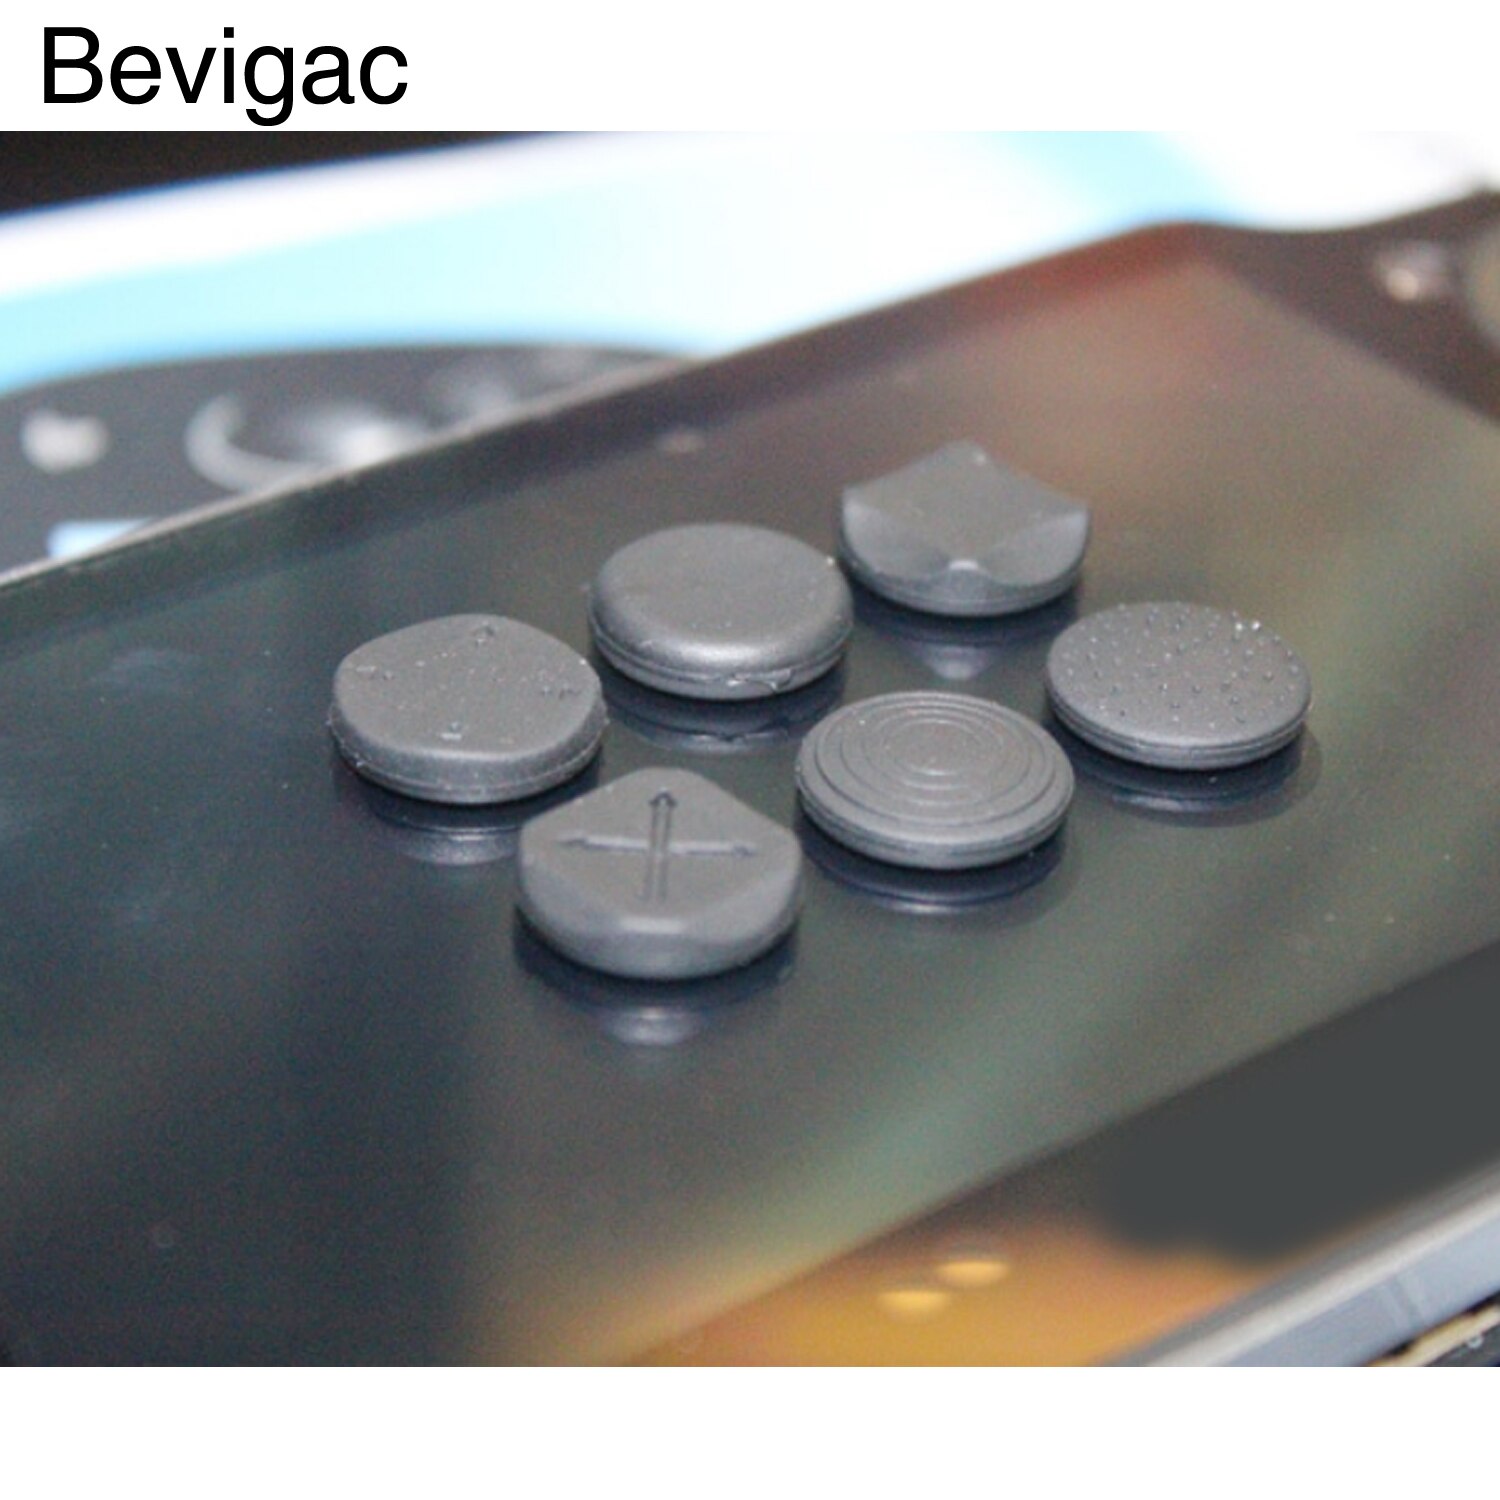 Bevigac 6 stks Silicone Thumbstick Grip Cap Joystick Analoge Beschermende Cover Case Voor Sony PlayStation Psvita PS Vita 1000 2000